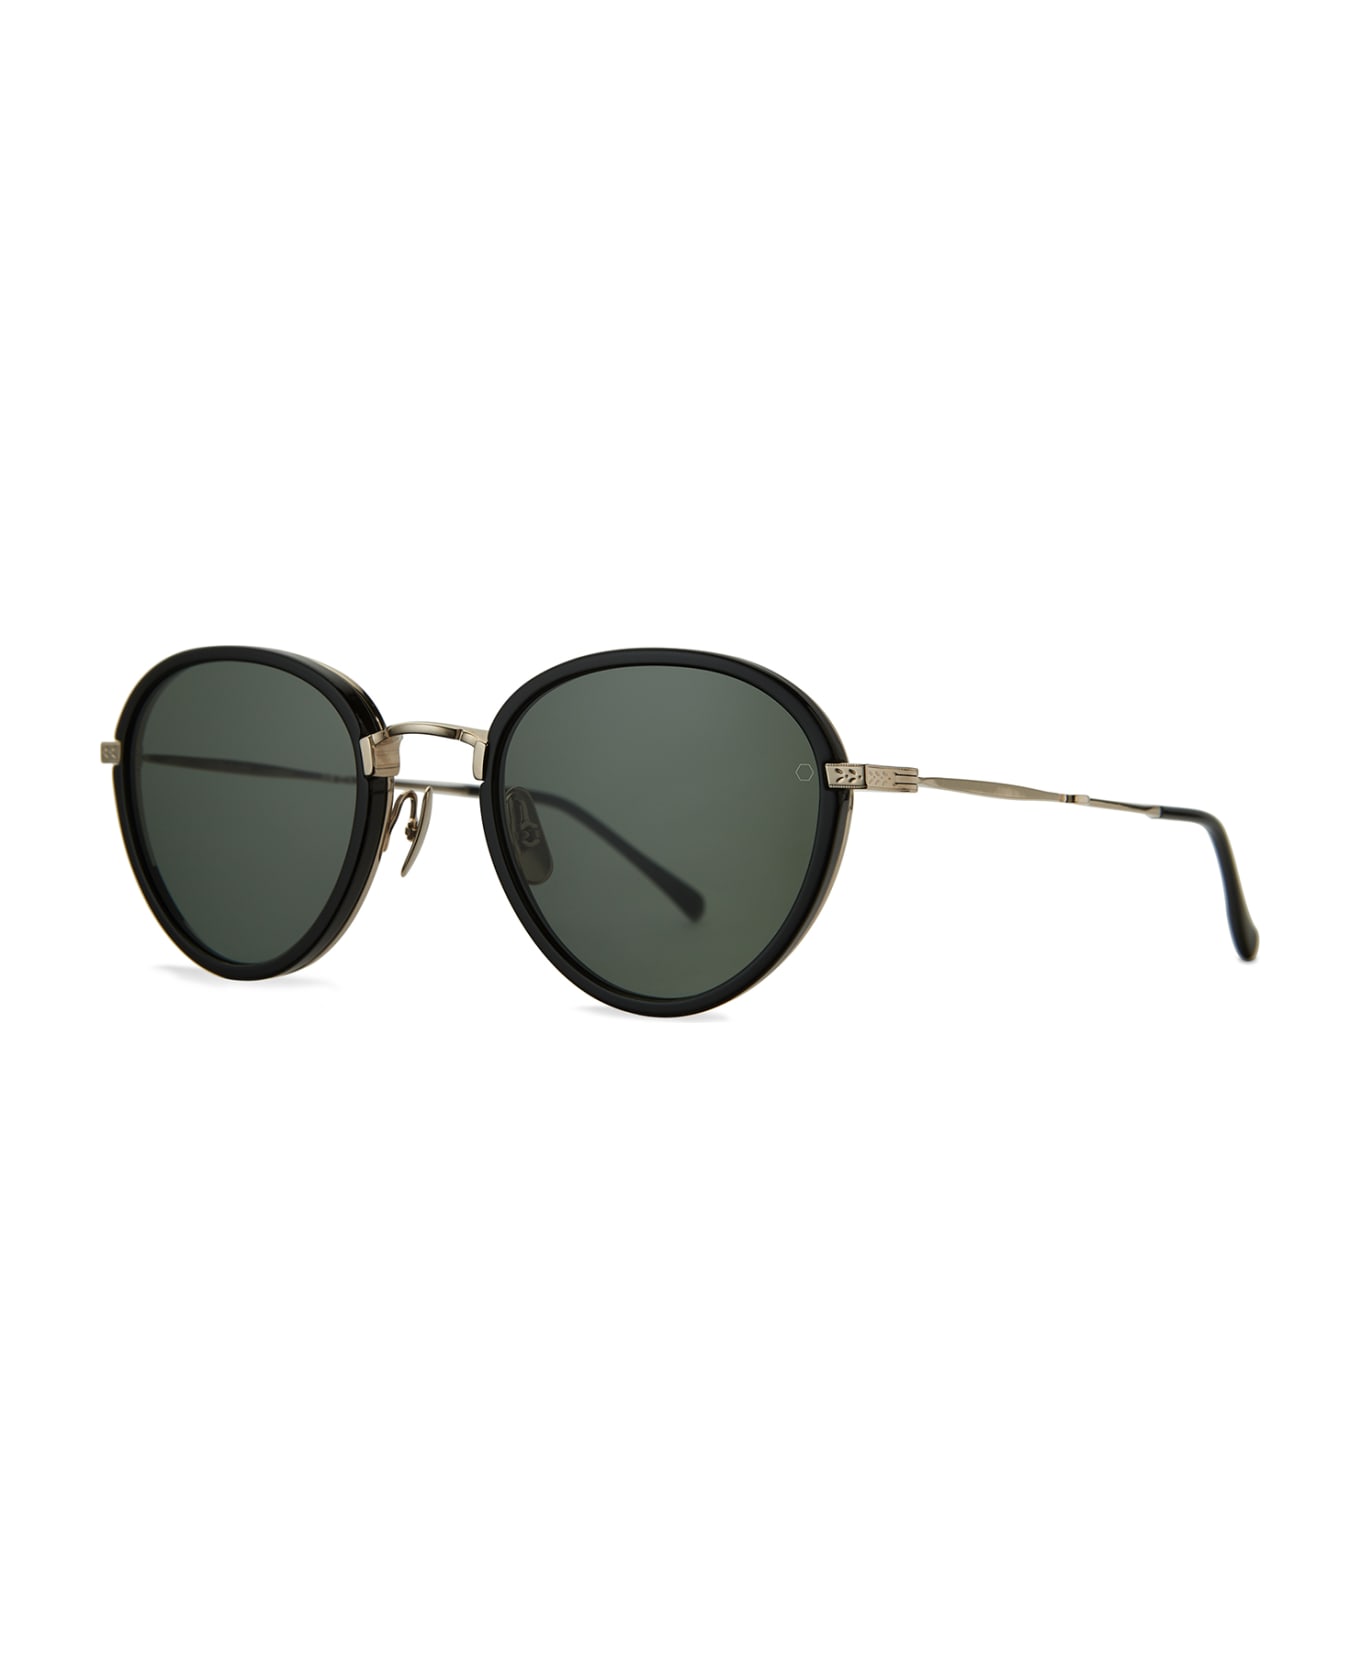 Mr. Leight Monterey Sl Black Sunglasses - Black